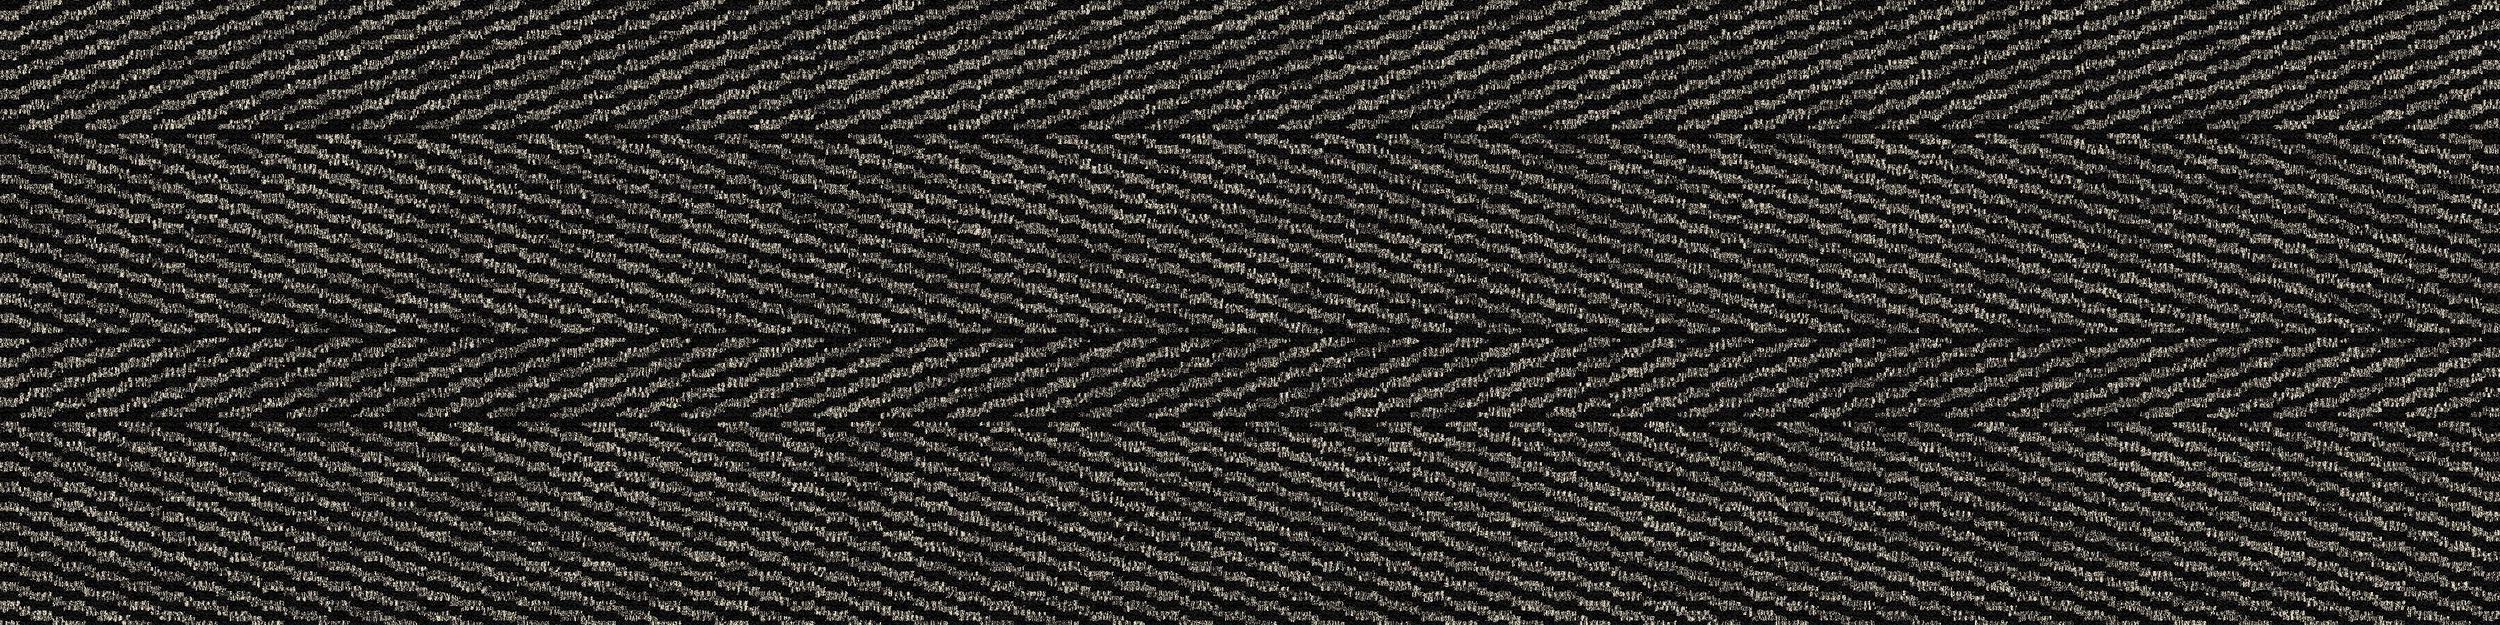 Stitch In Time Carpet Tile In Black Stitch image number 2